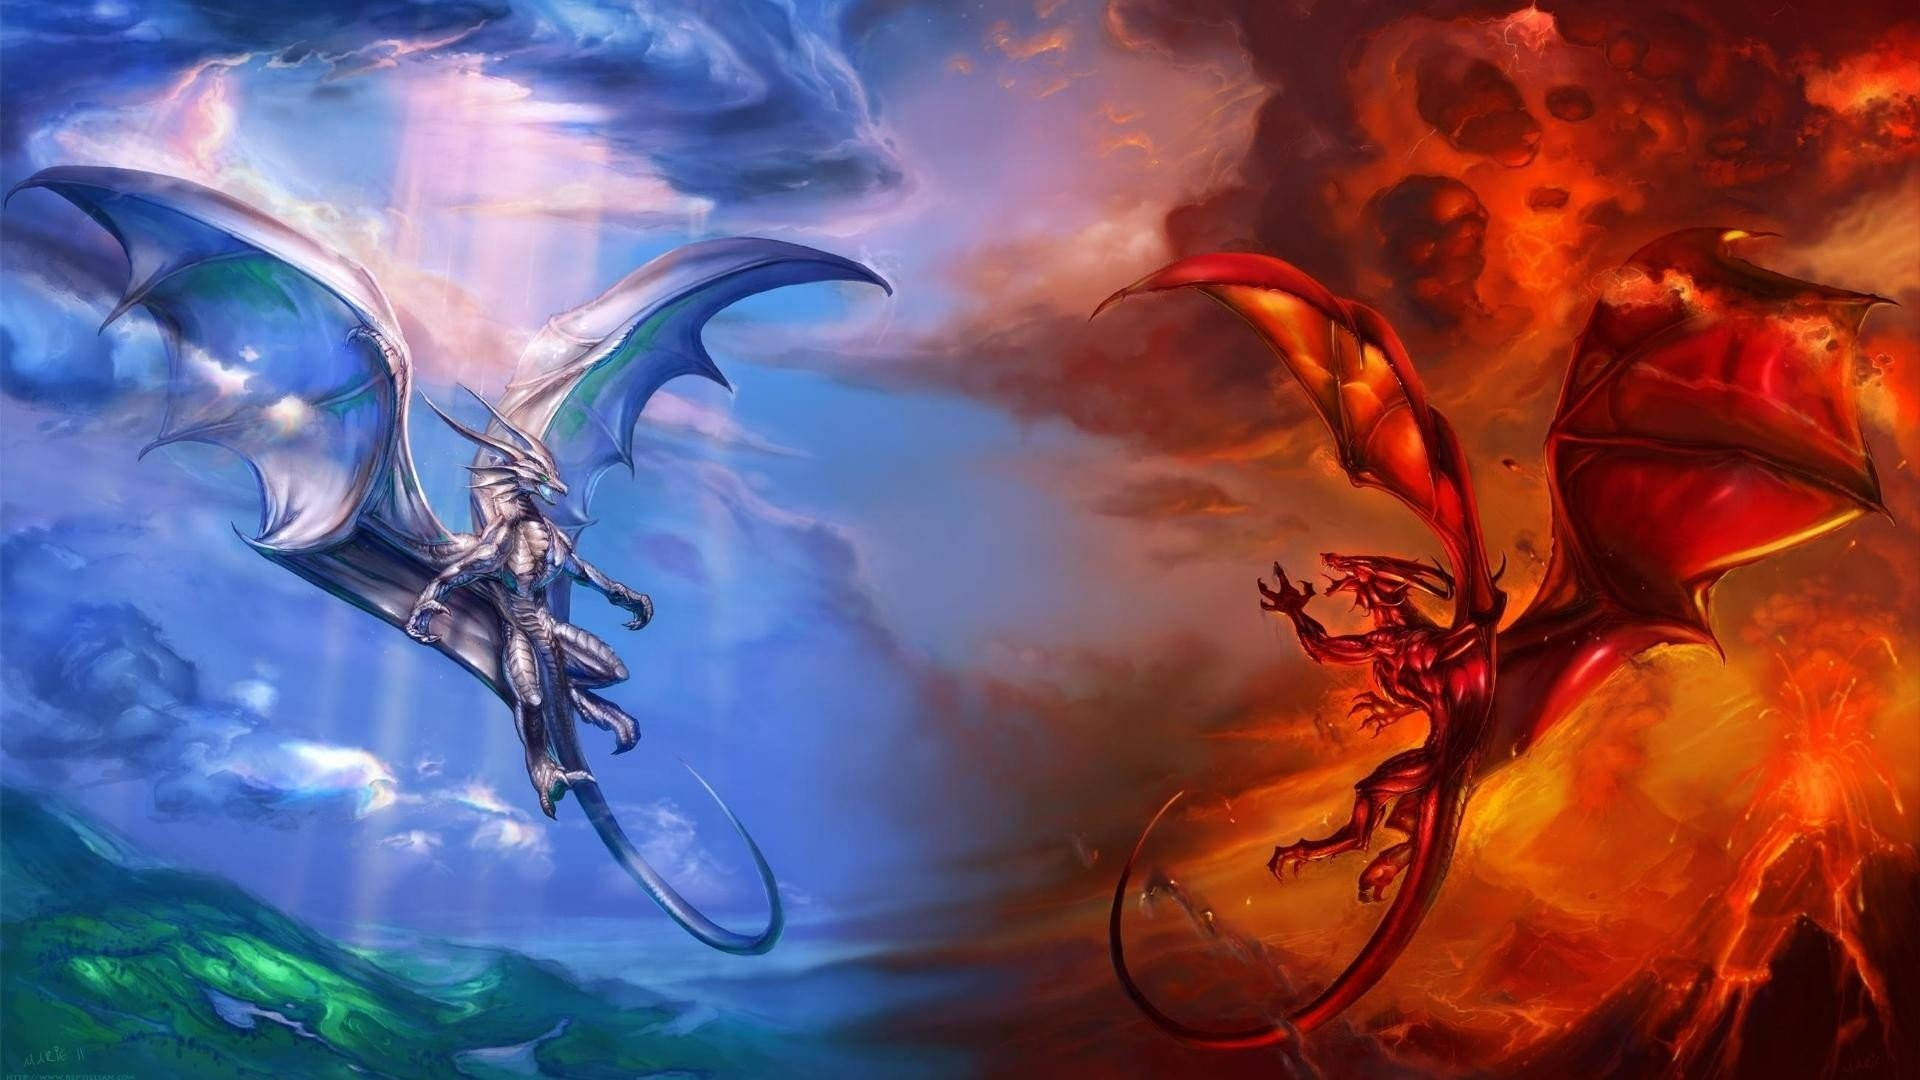 Coolest Dragon Order And Chaos Digital Art Wallpaper